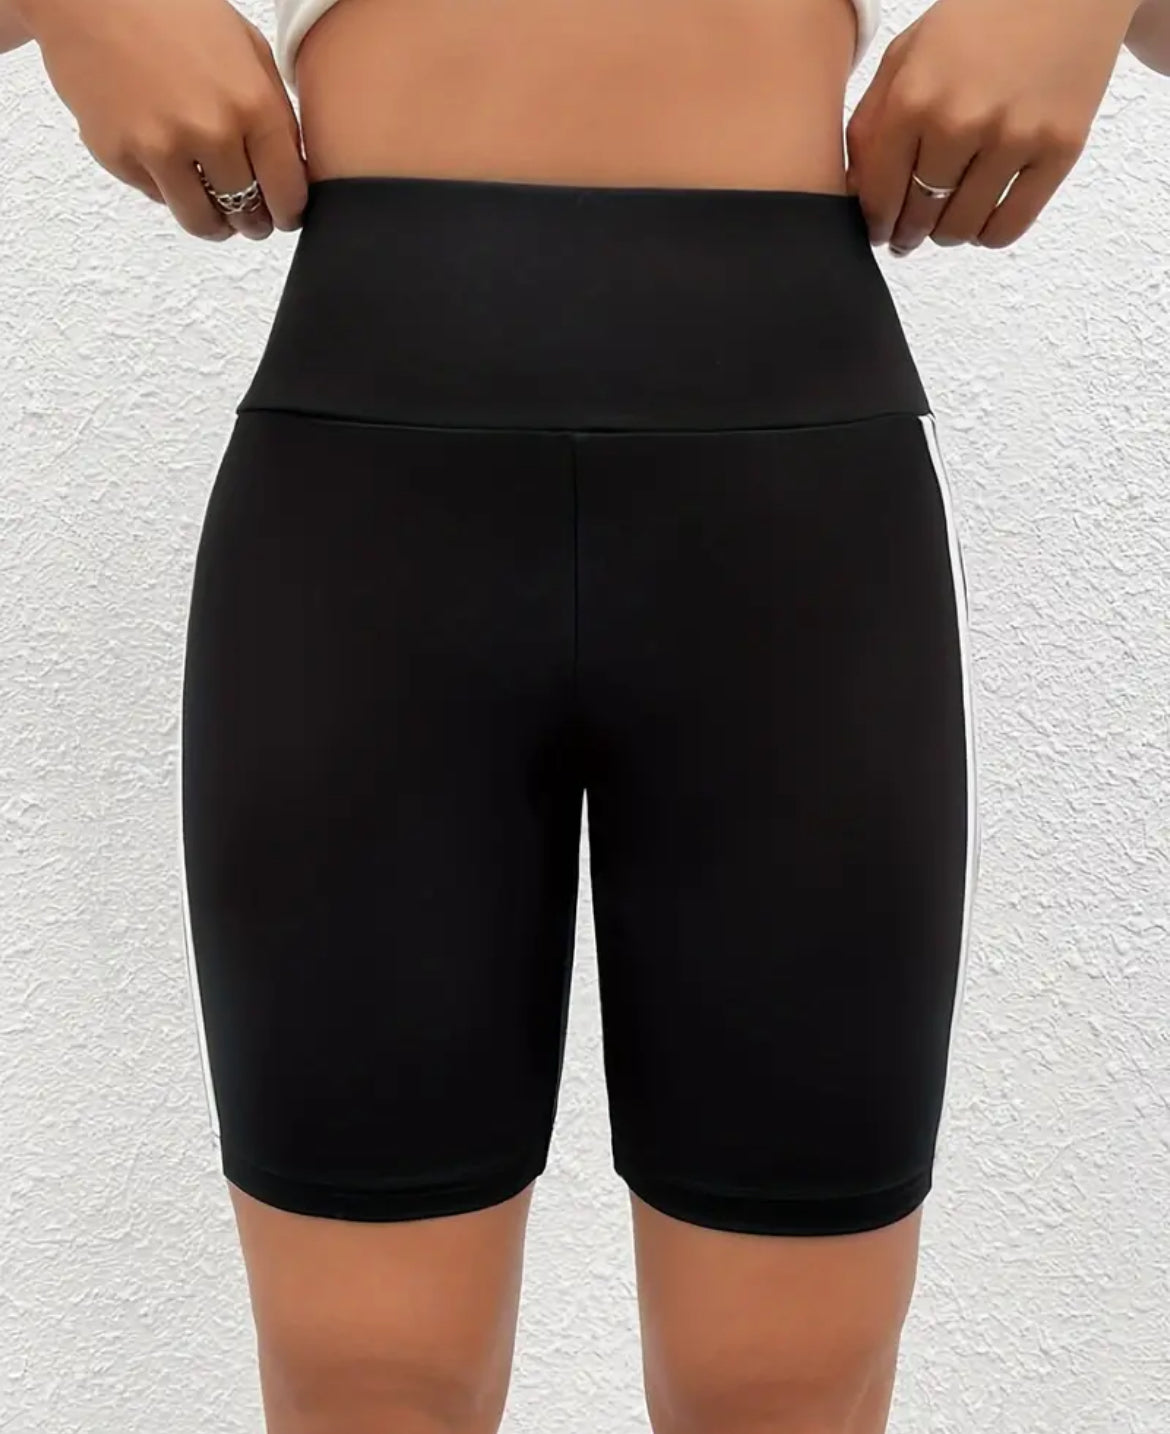 Black Striped High-Waist Sporty Crop Leggings – Women's Casual Yoga Shorts